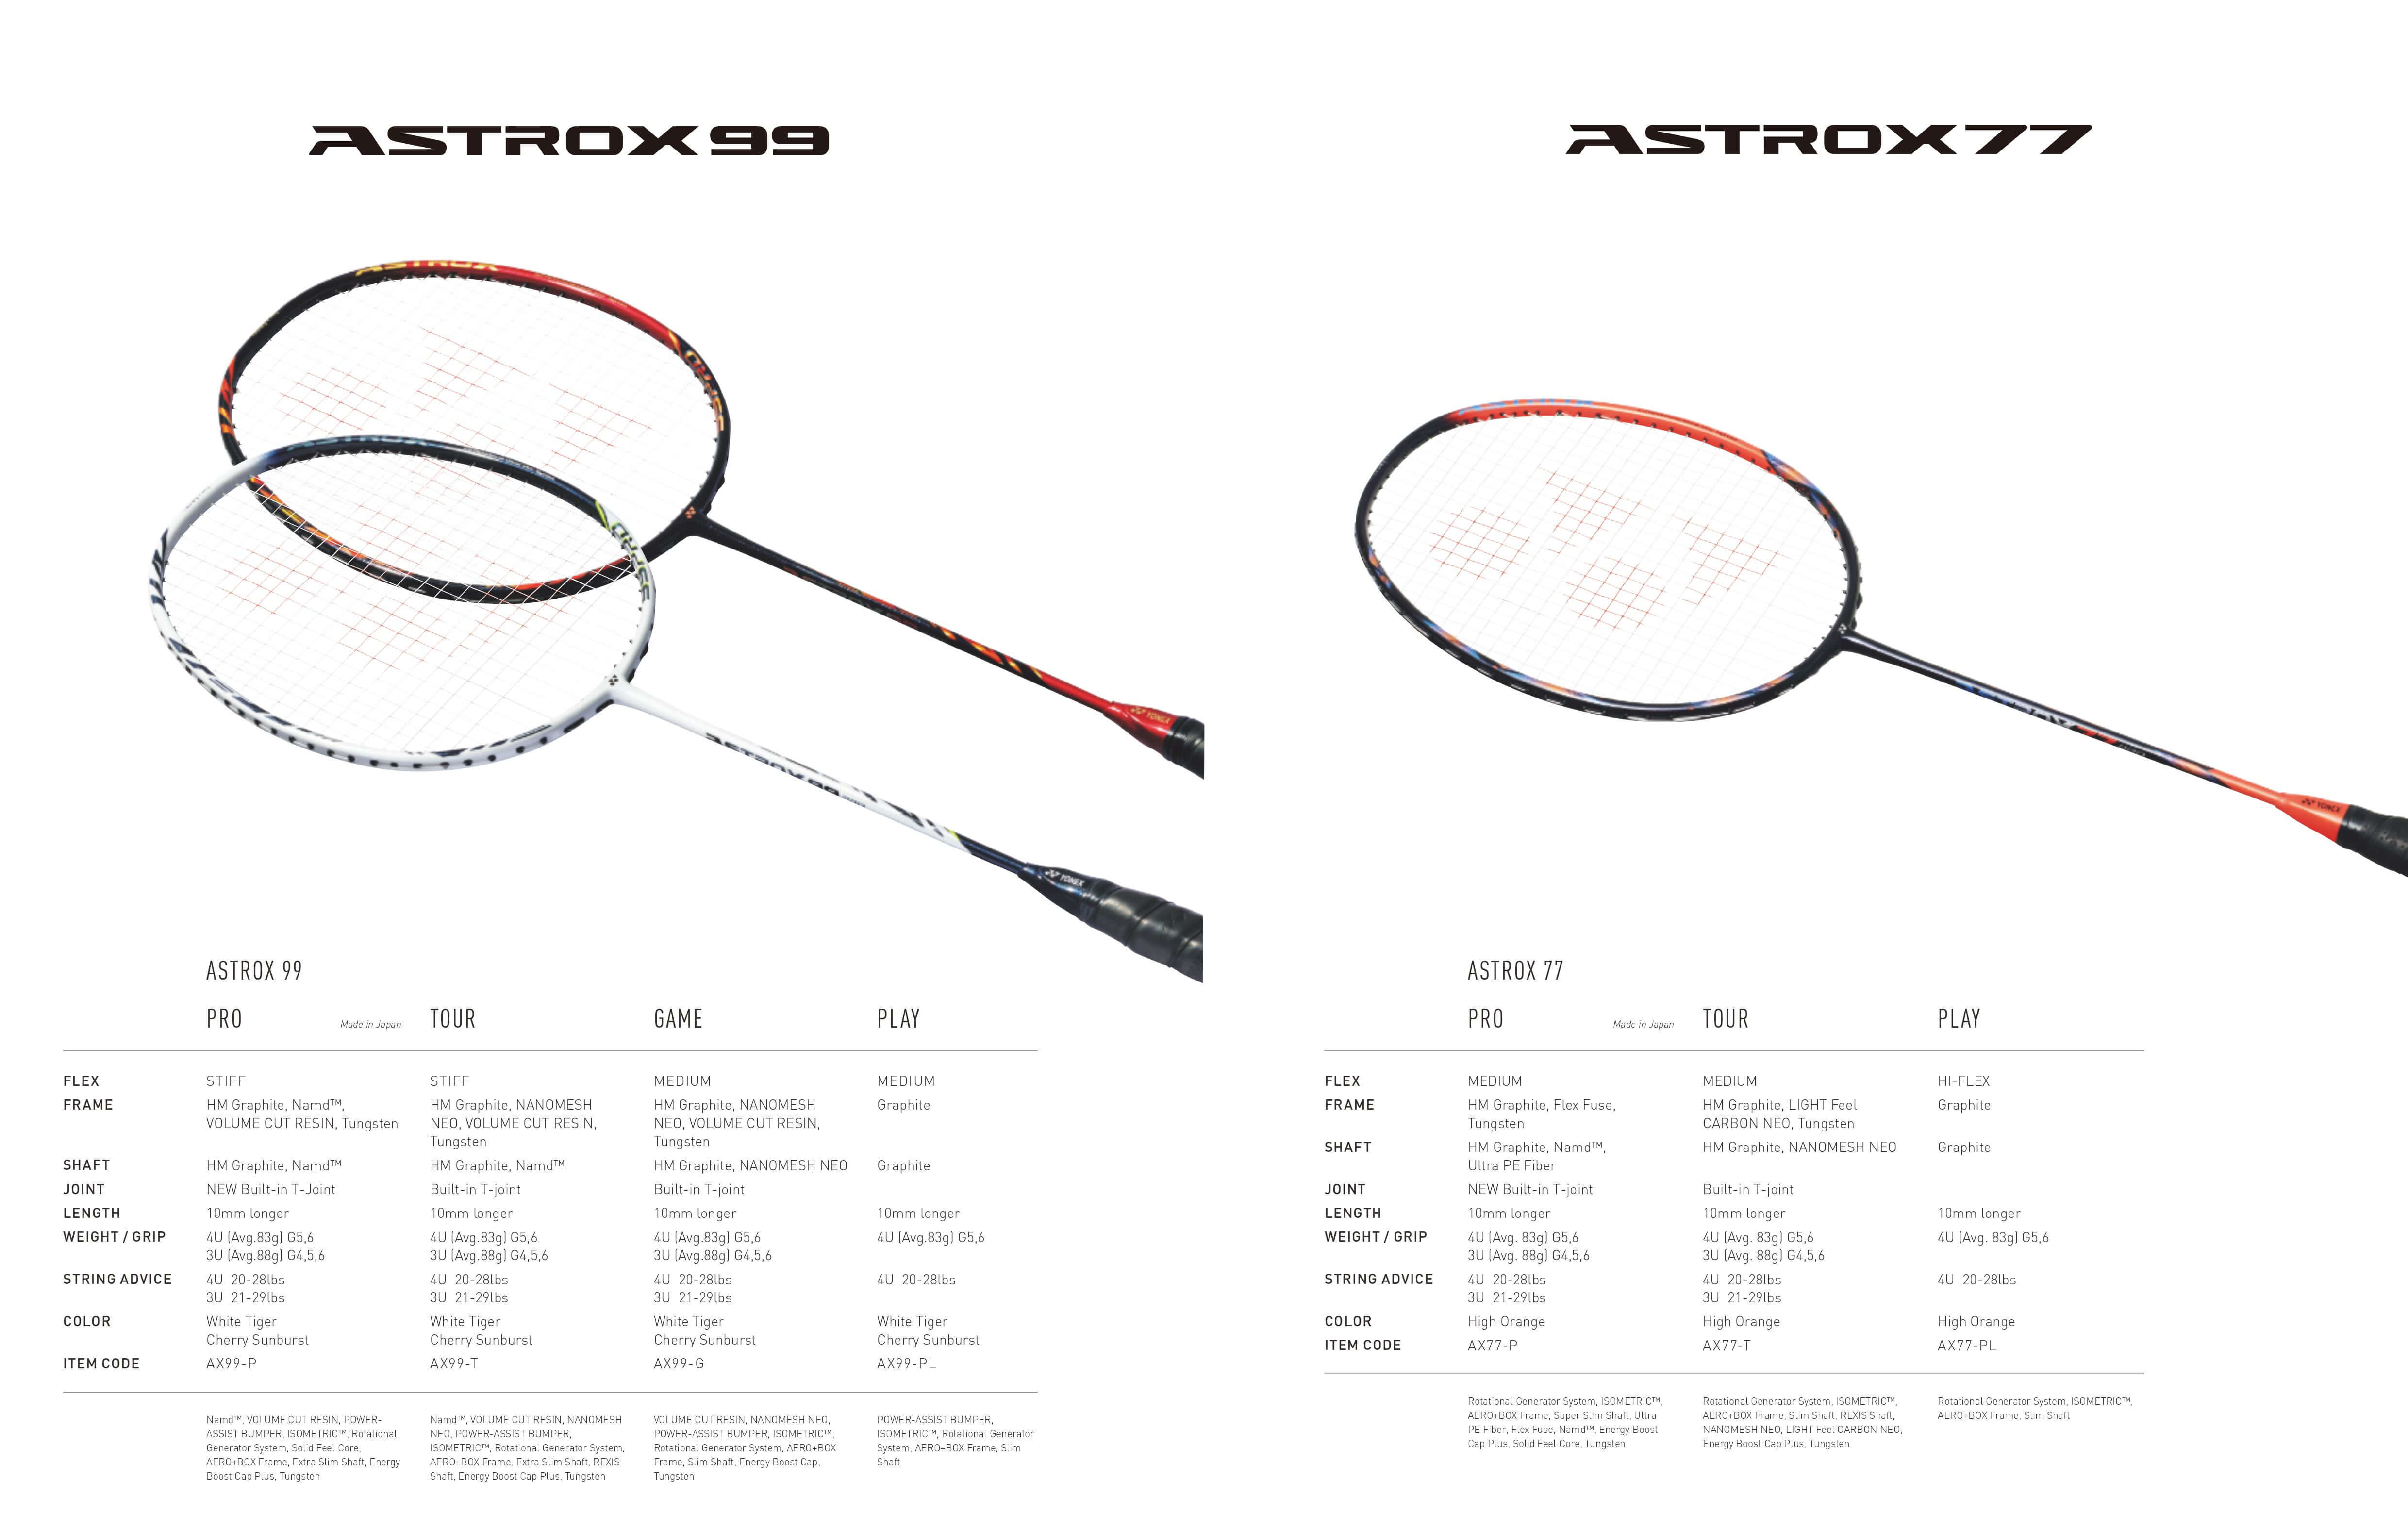 Yonex Astrox 99 and Astrox 77 rackets